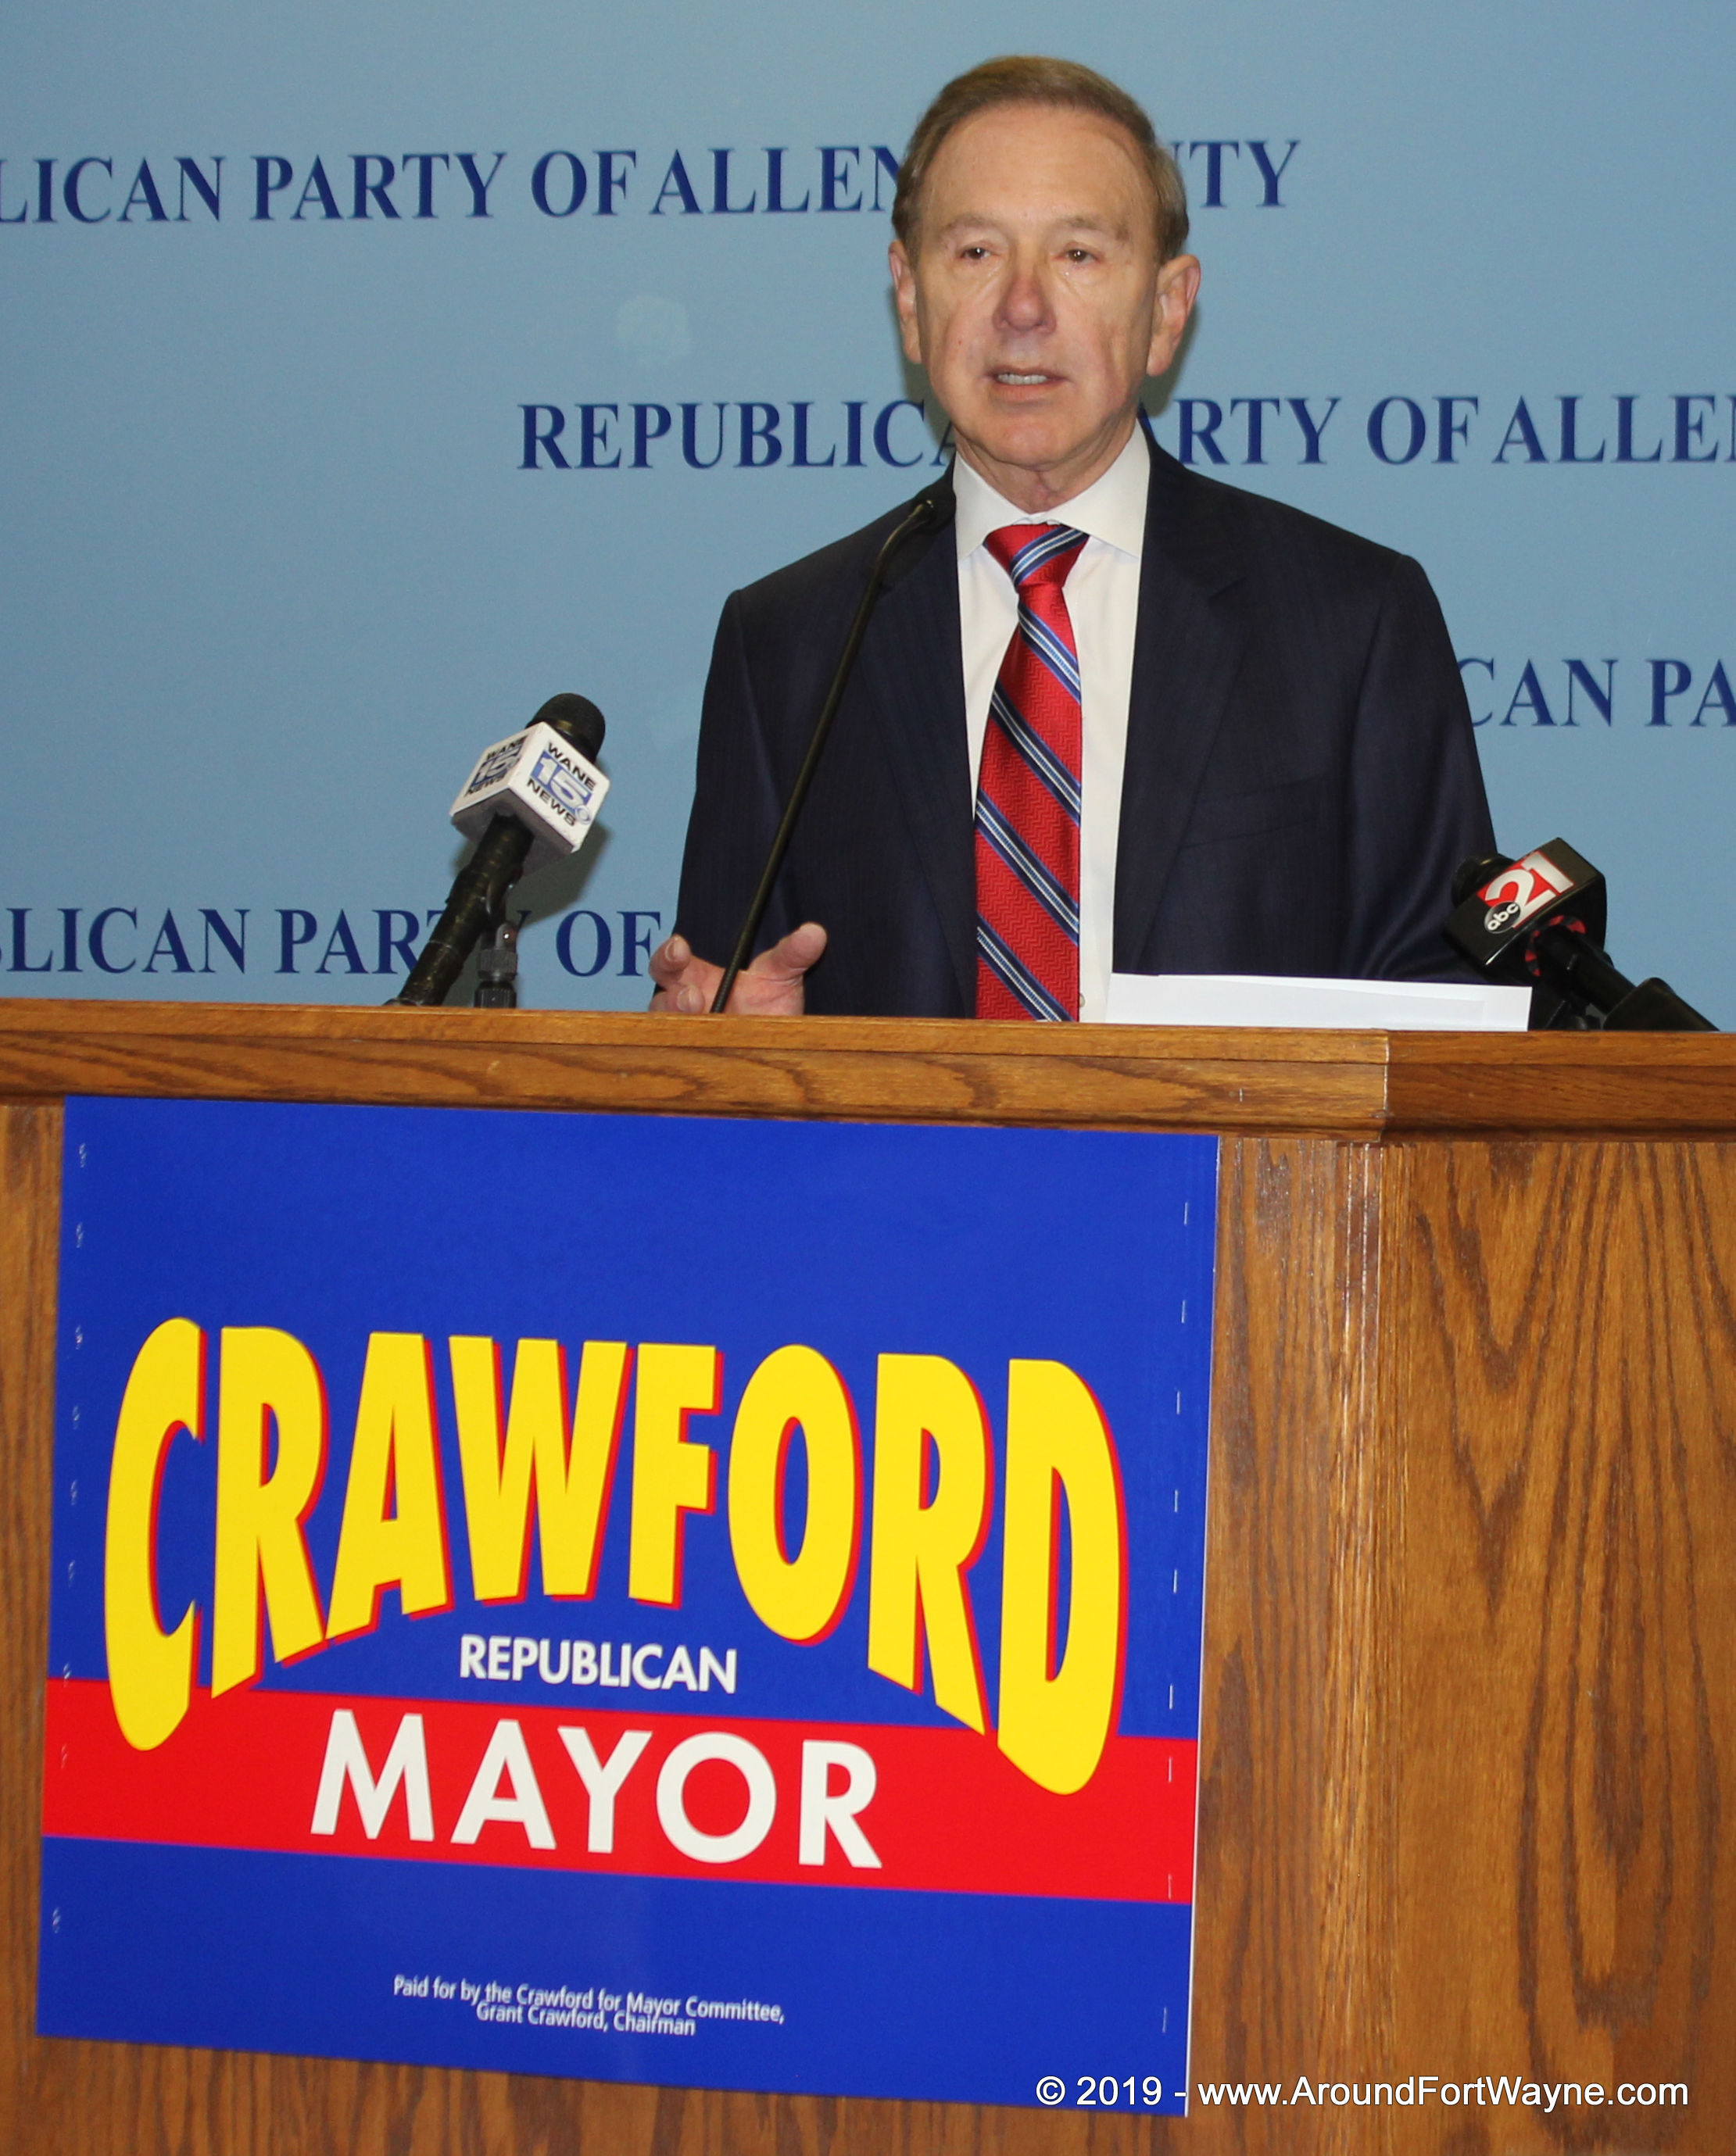 Fort Wayne Indiana Mayoral candidate John Crawford (R)